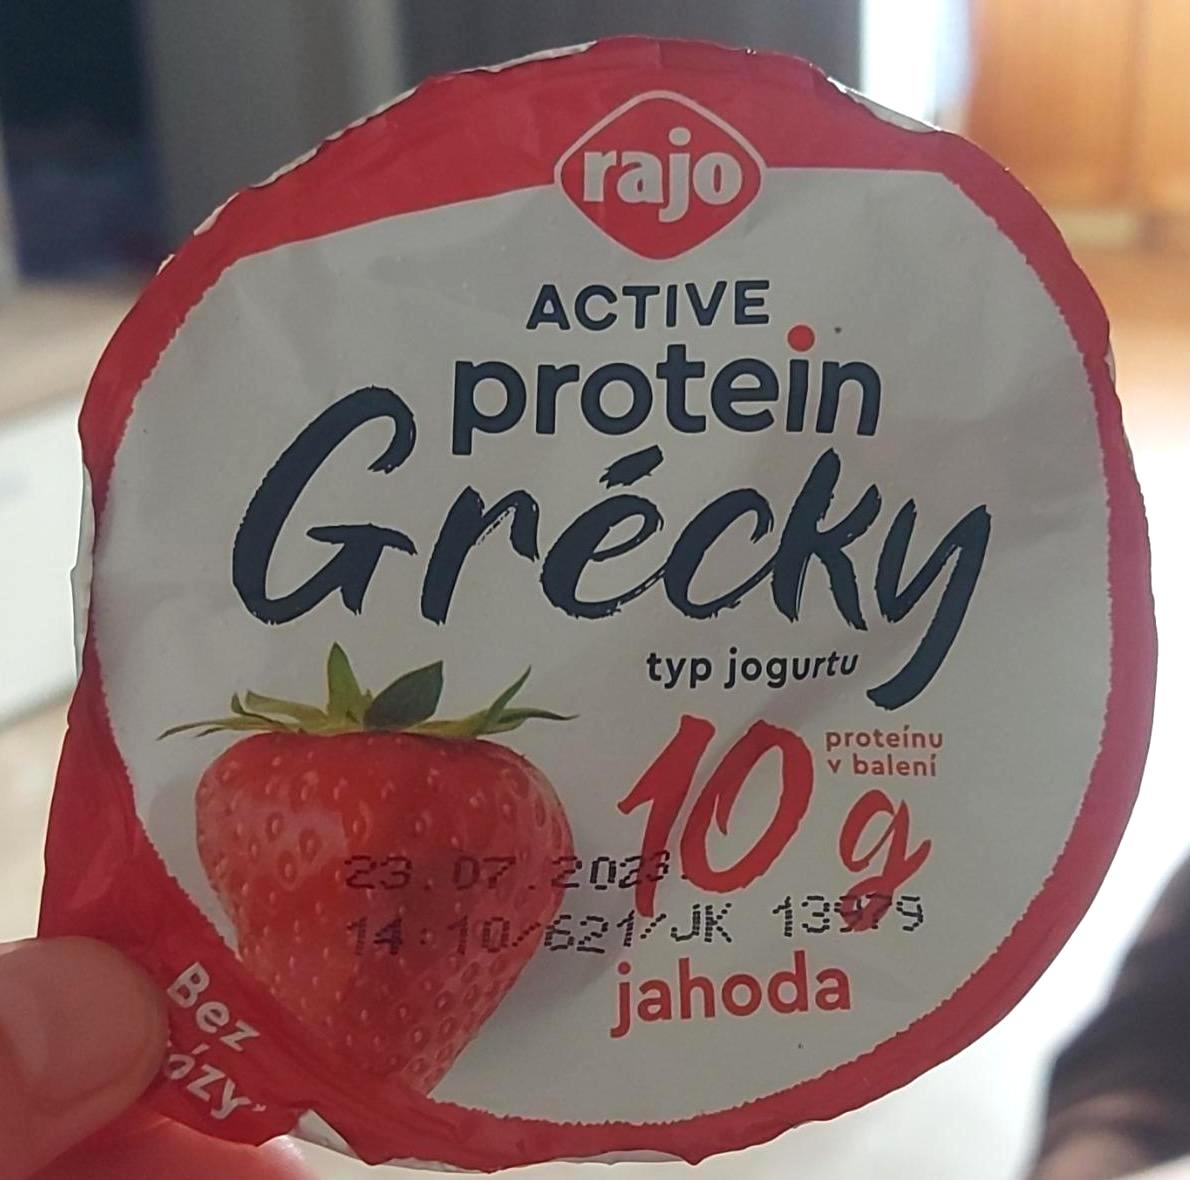 Képek - Active protein görög joghurt Epres Rajo